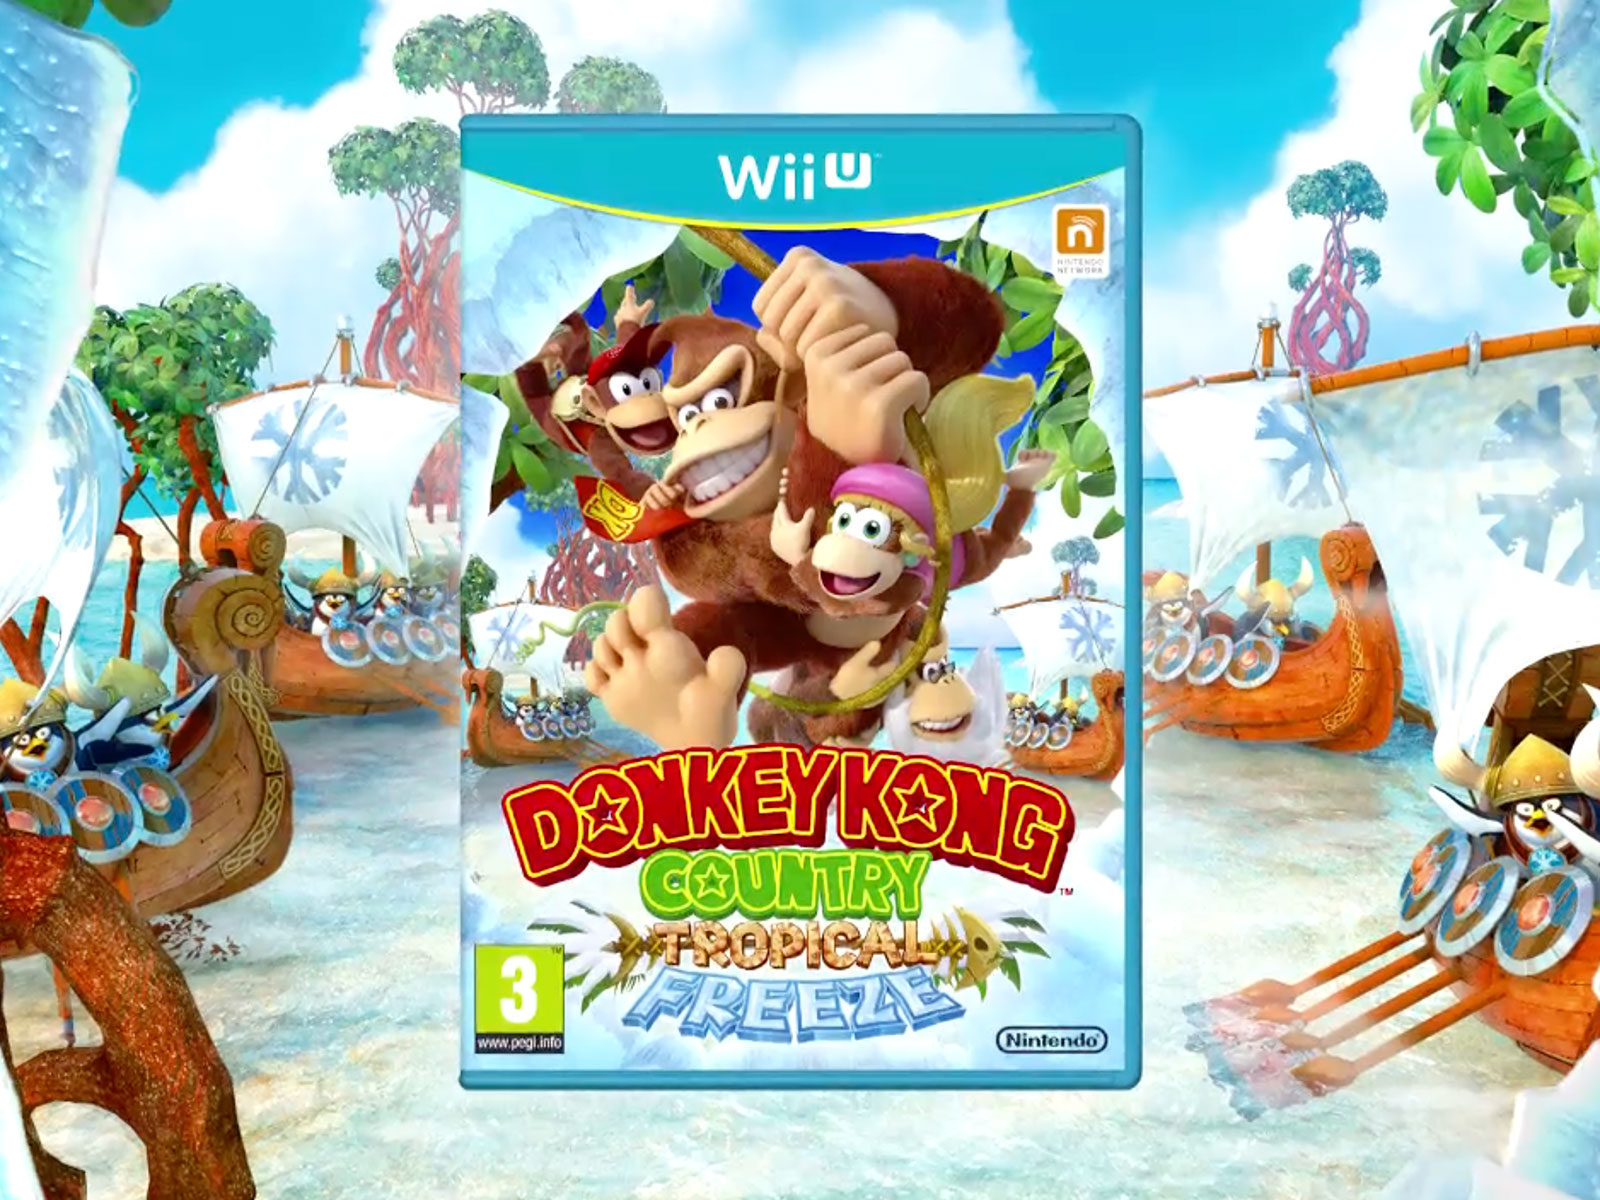 WiU - Donkey Kong Country